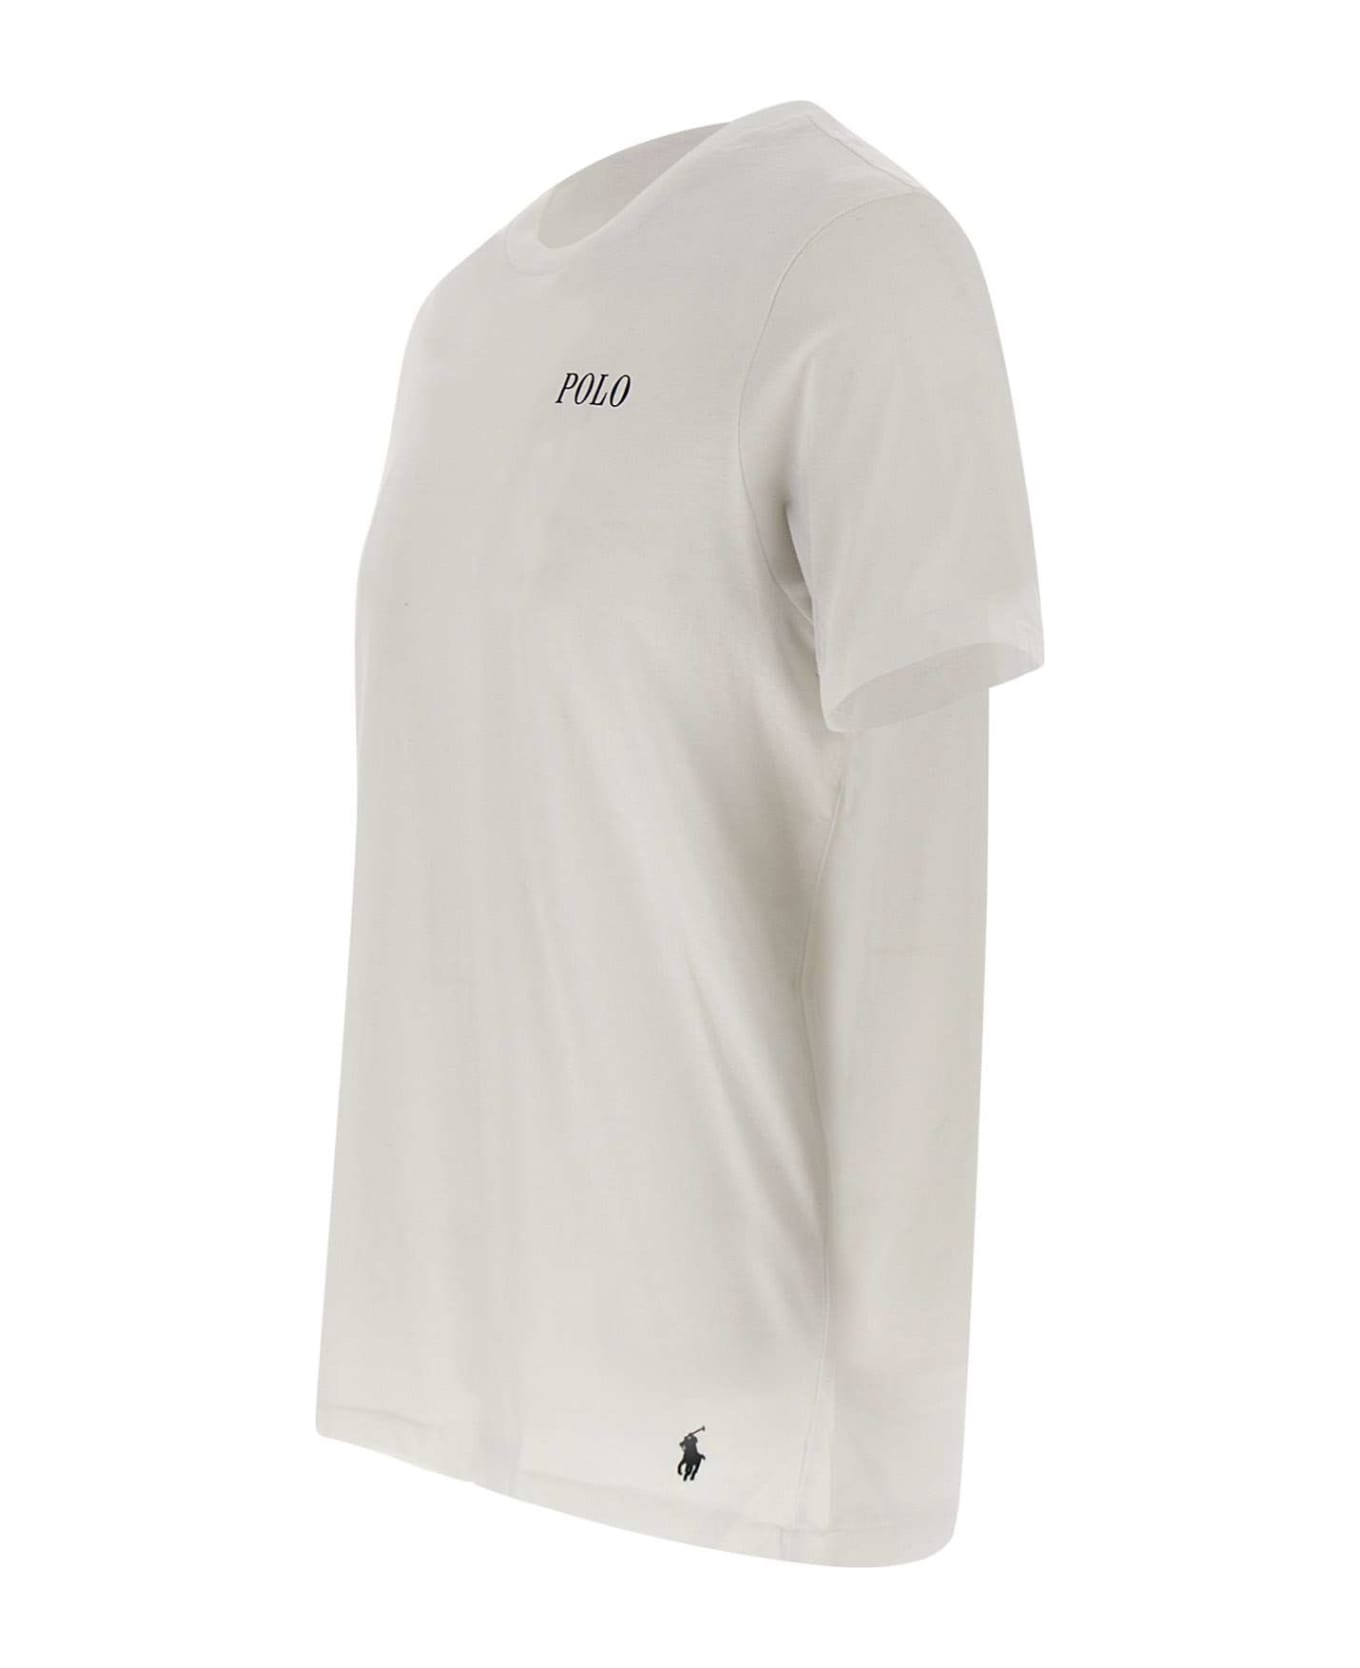 Polo Ralph Lauren "msw" Cotton T-shirt - WHITE